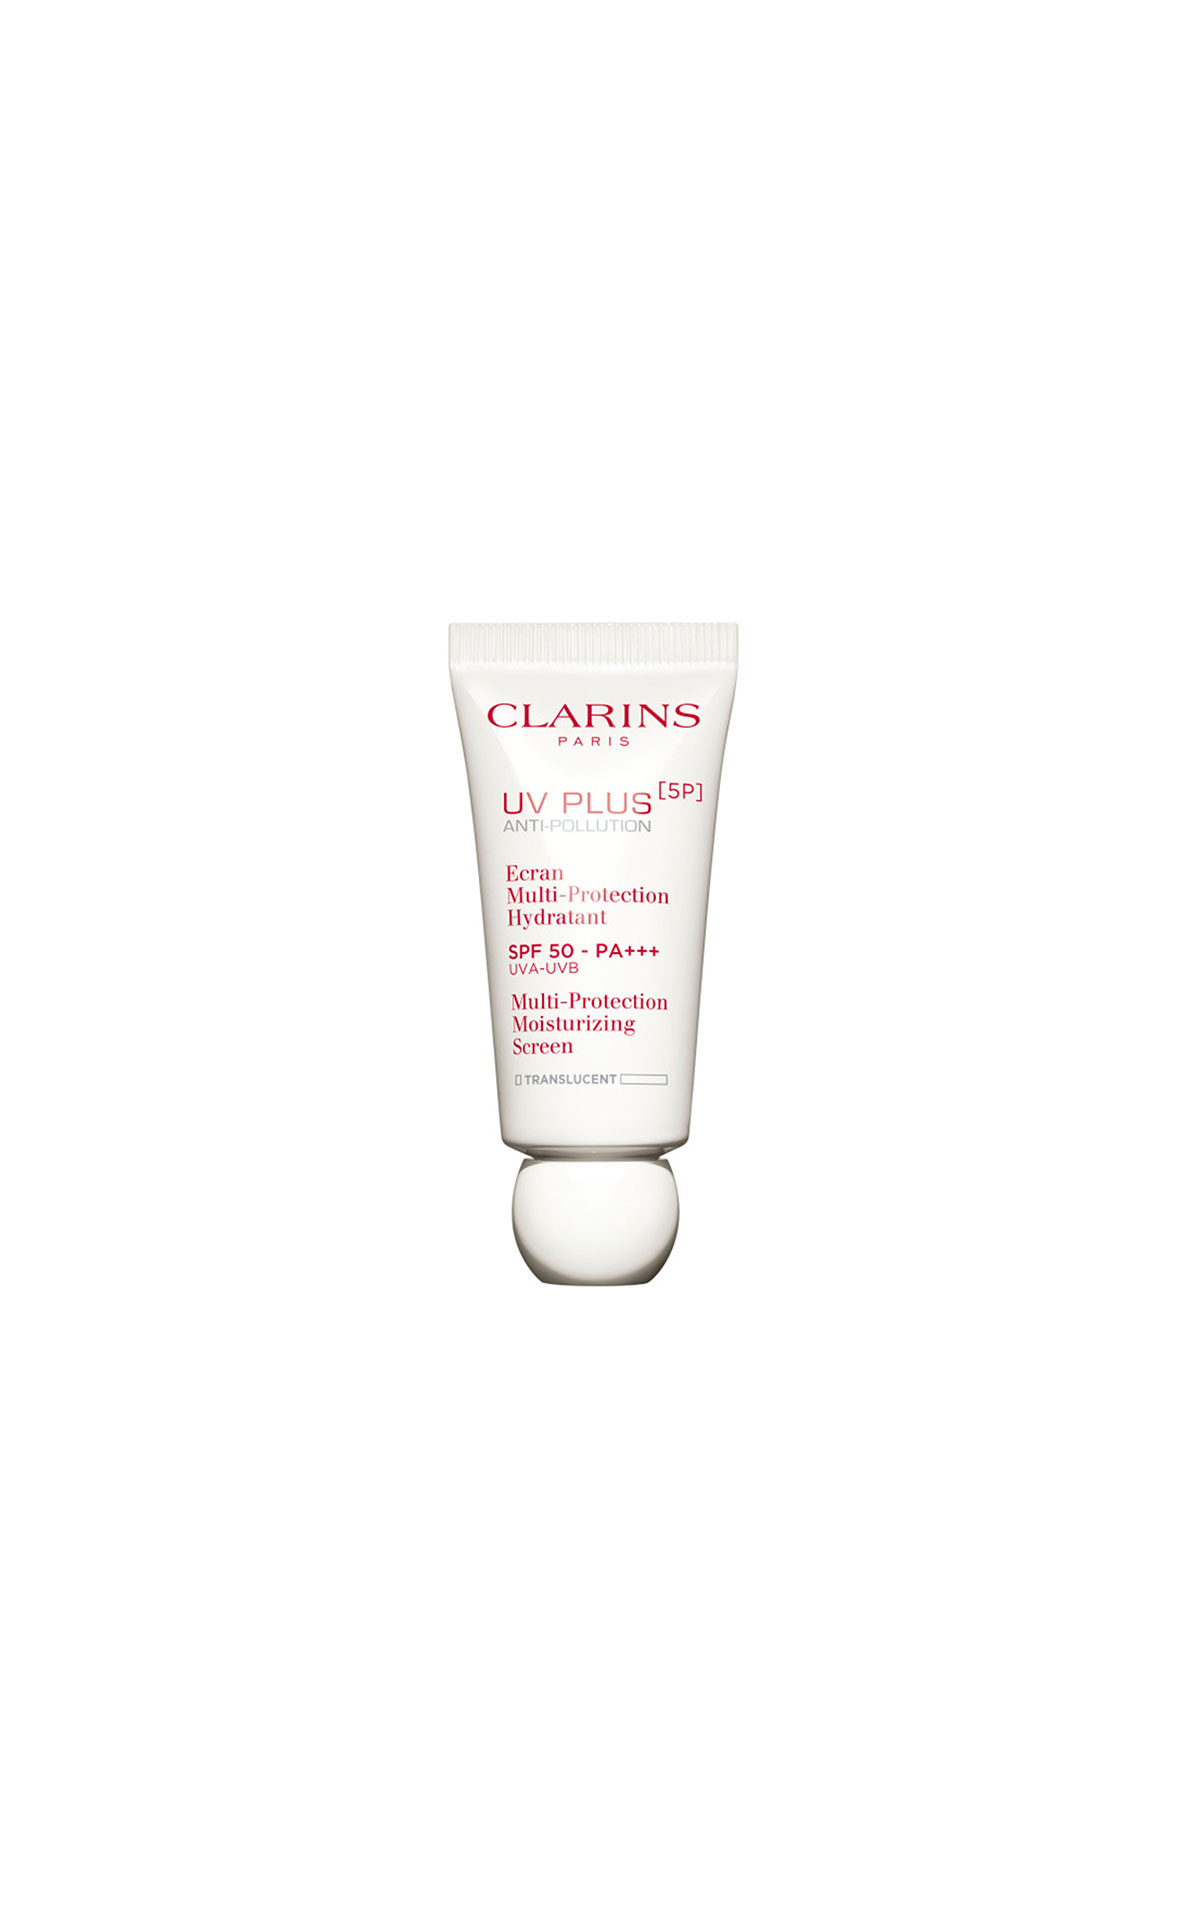 Clarins UV plus multi protection moisturising cream from Bicester Village